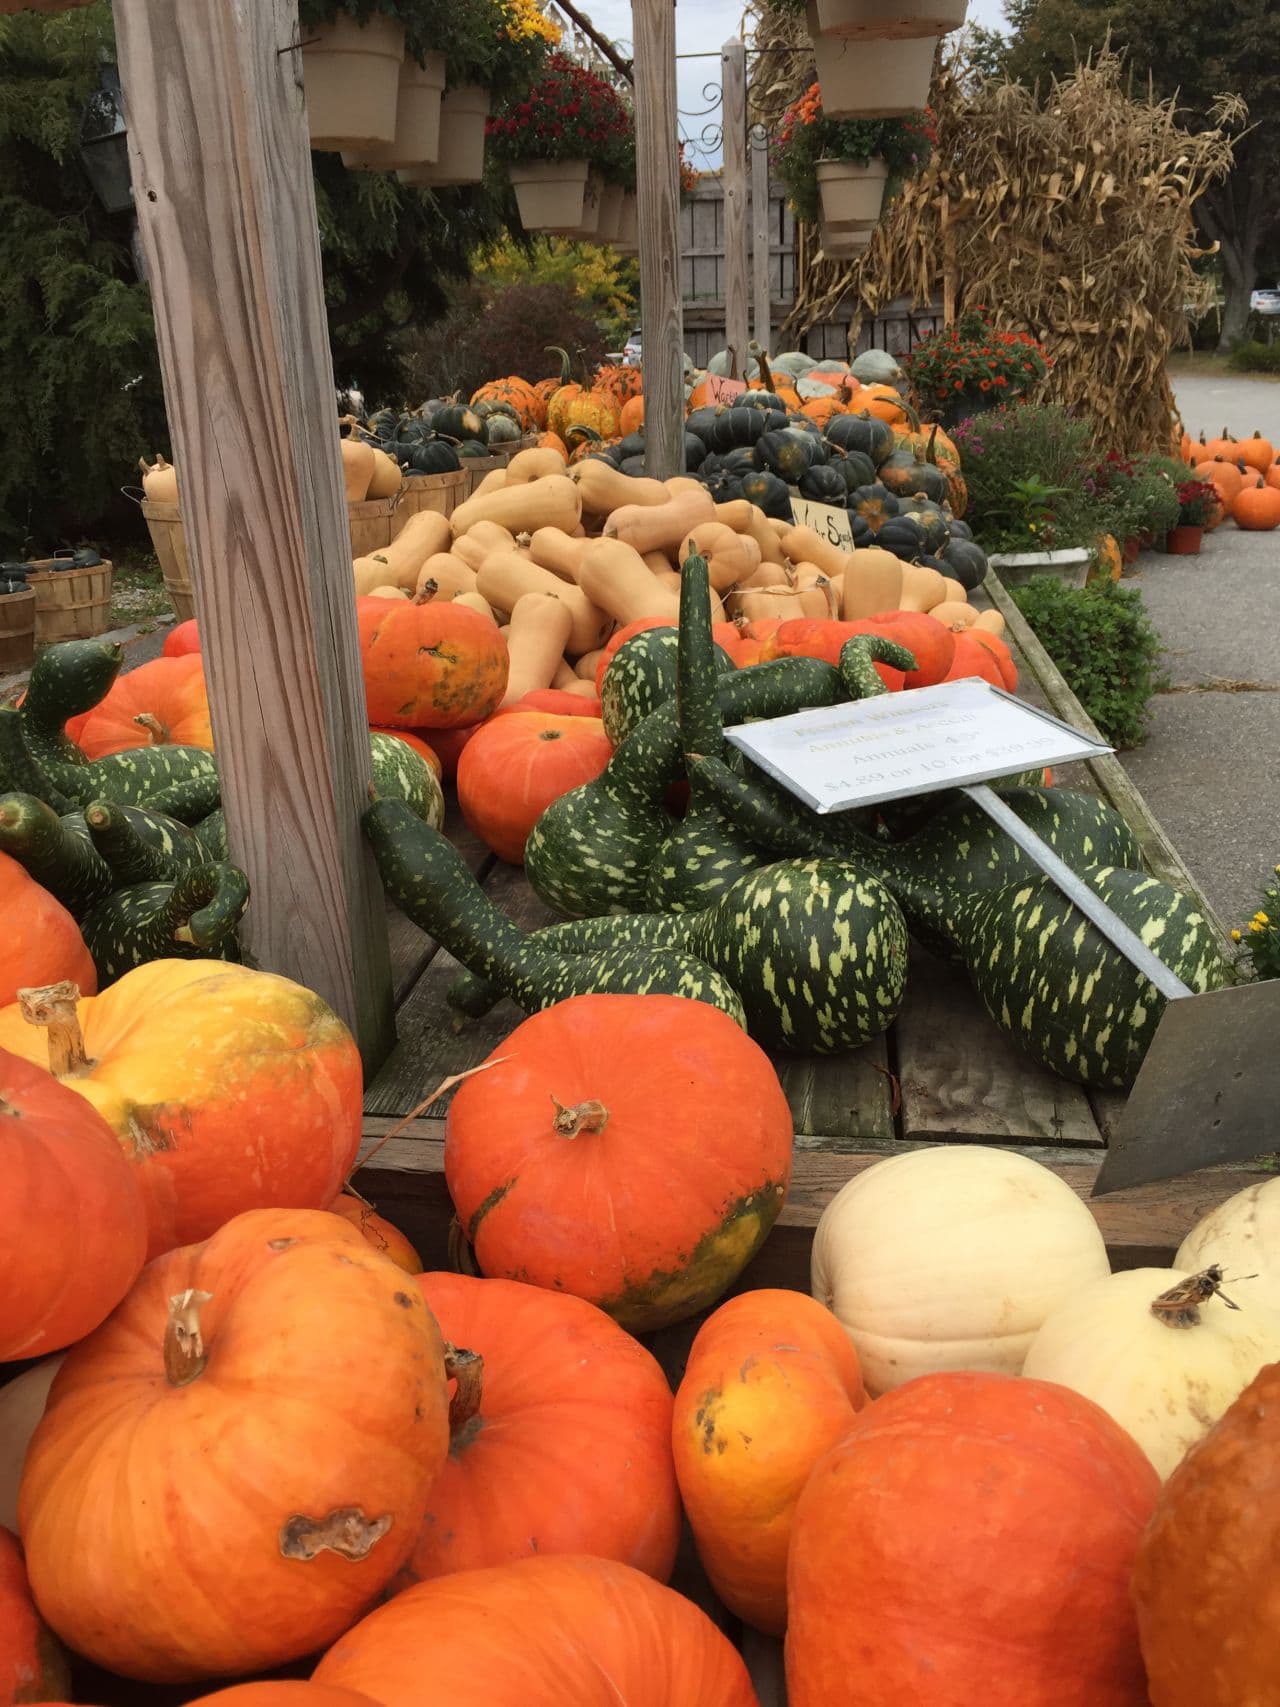 Squash and pumpkins on display at Brookdale Fruit Farm in Hollis, N.H. (Anthony Brooks/WBUR)